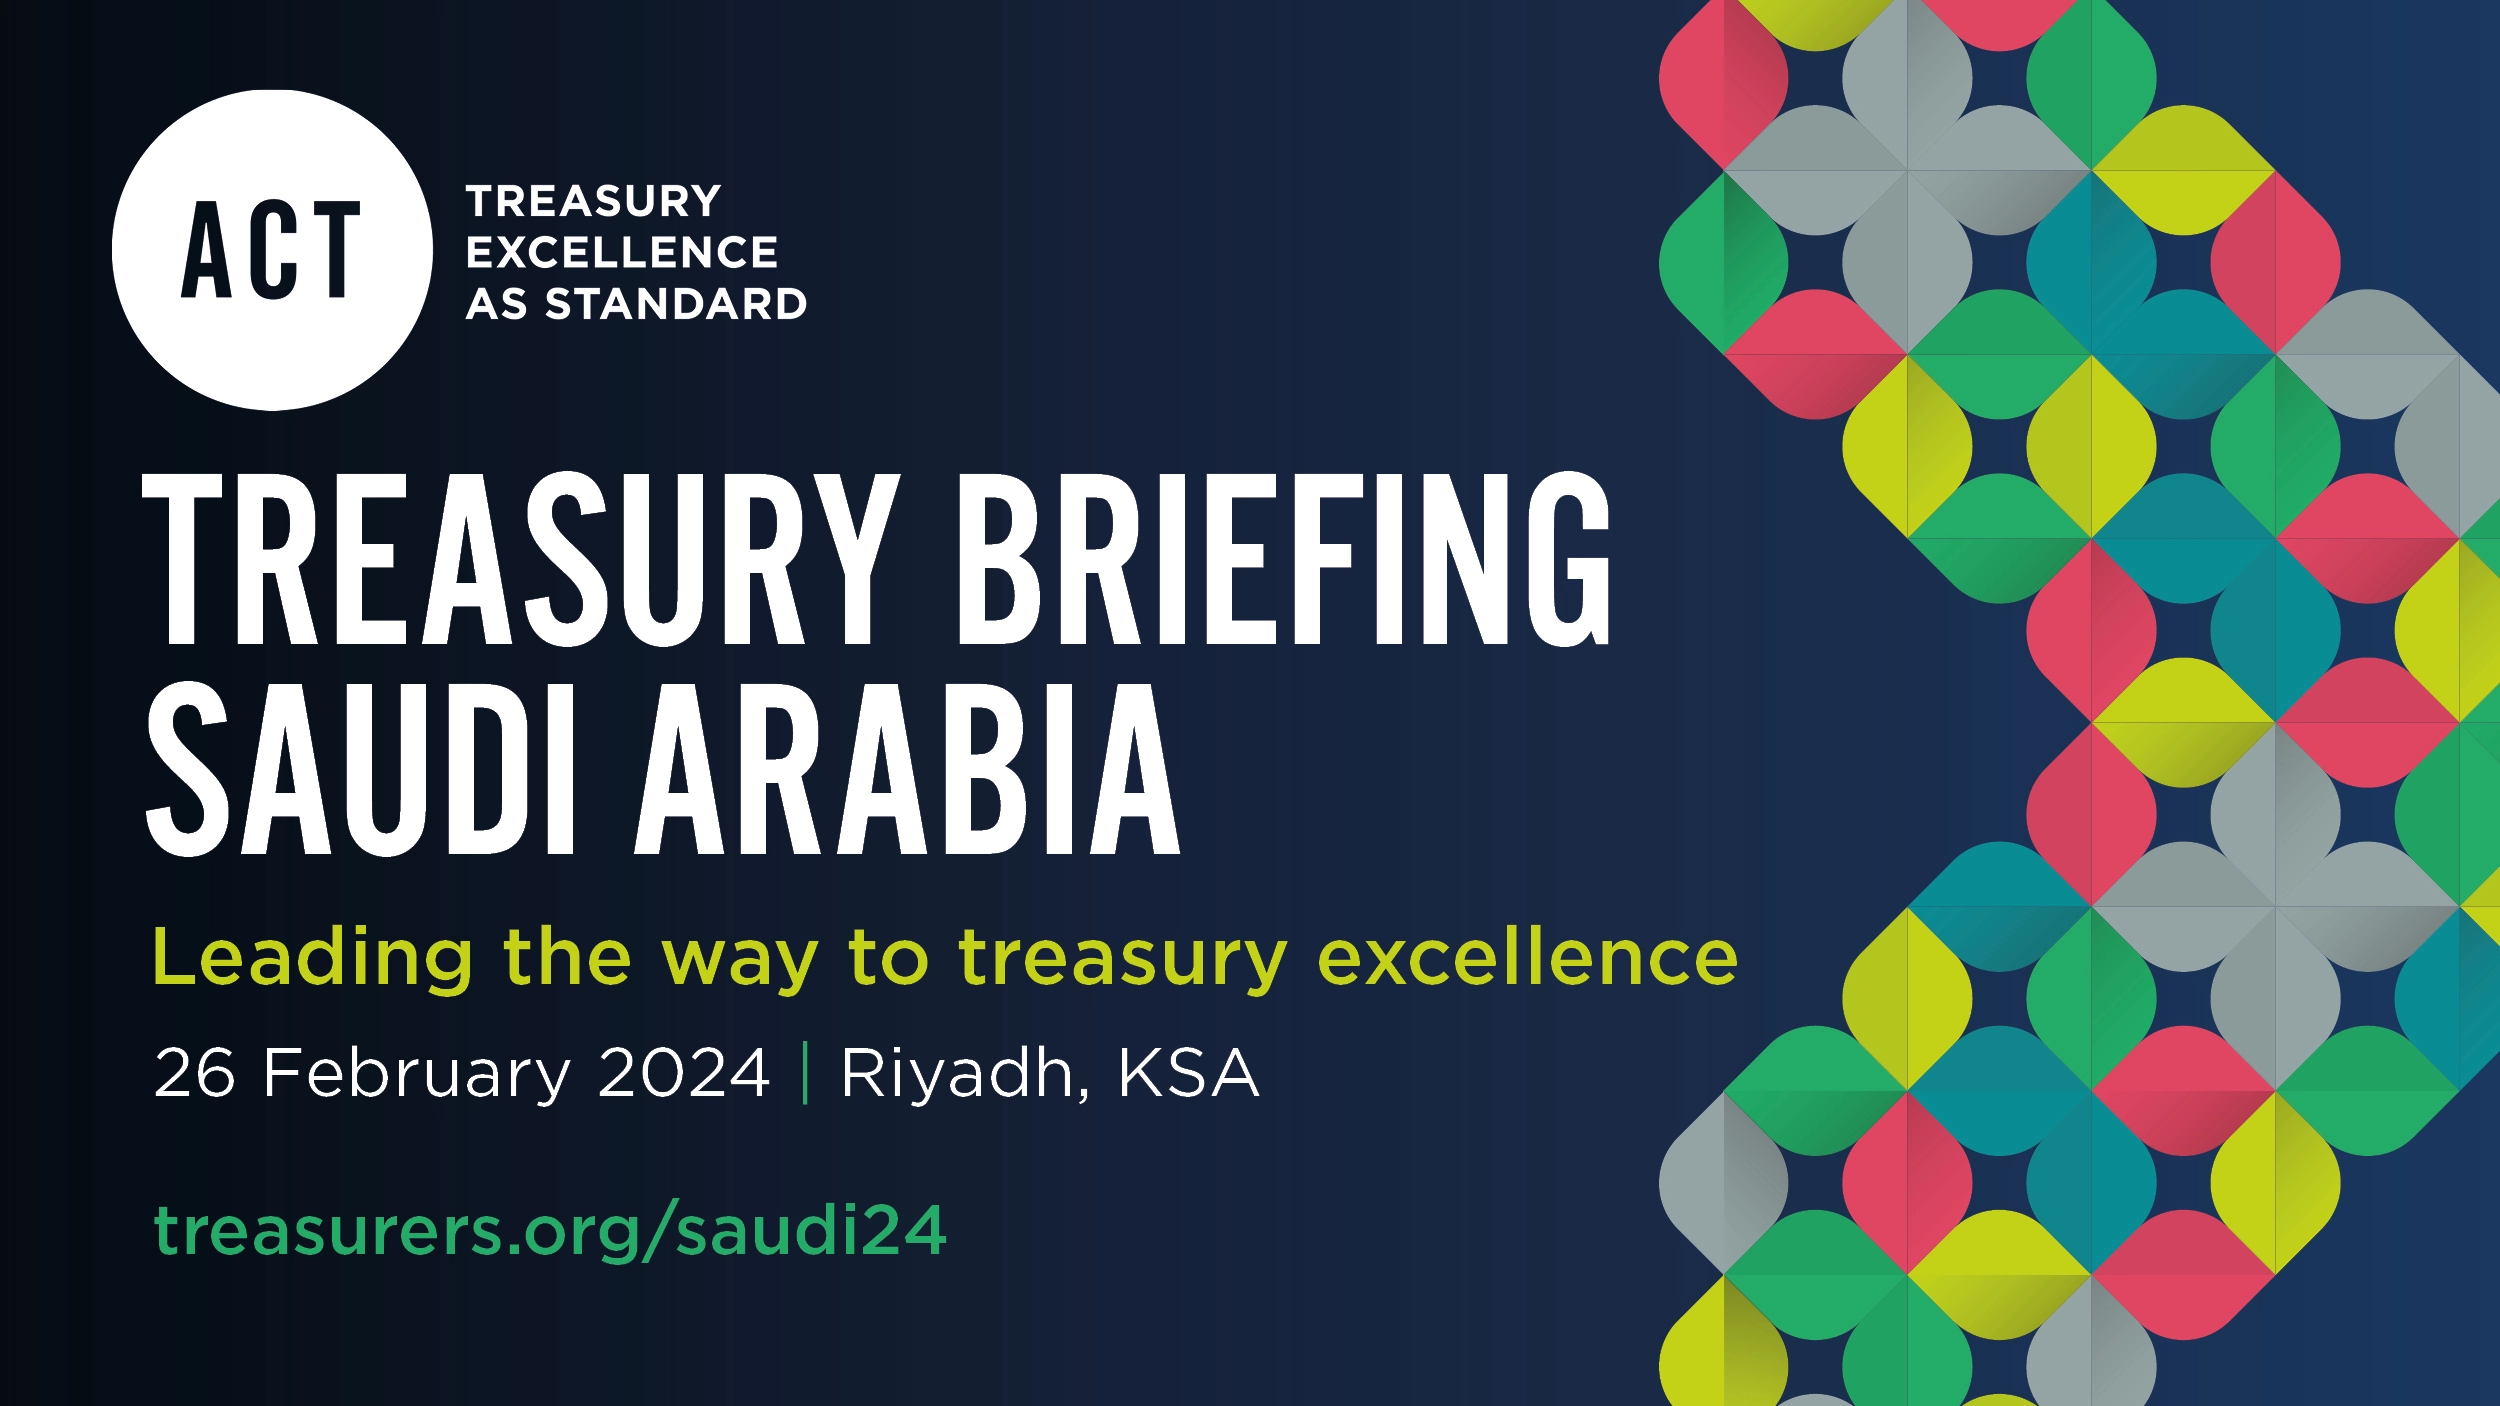 ACT Treasury Briefing Saudi Arabia 2024